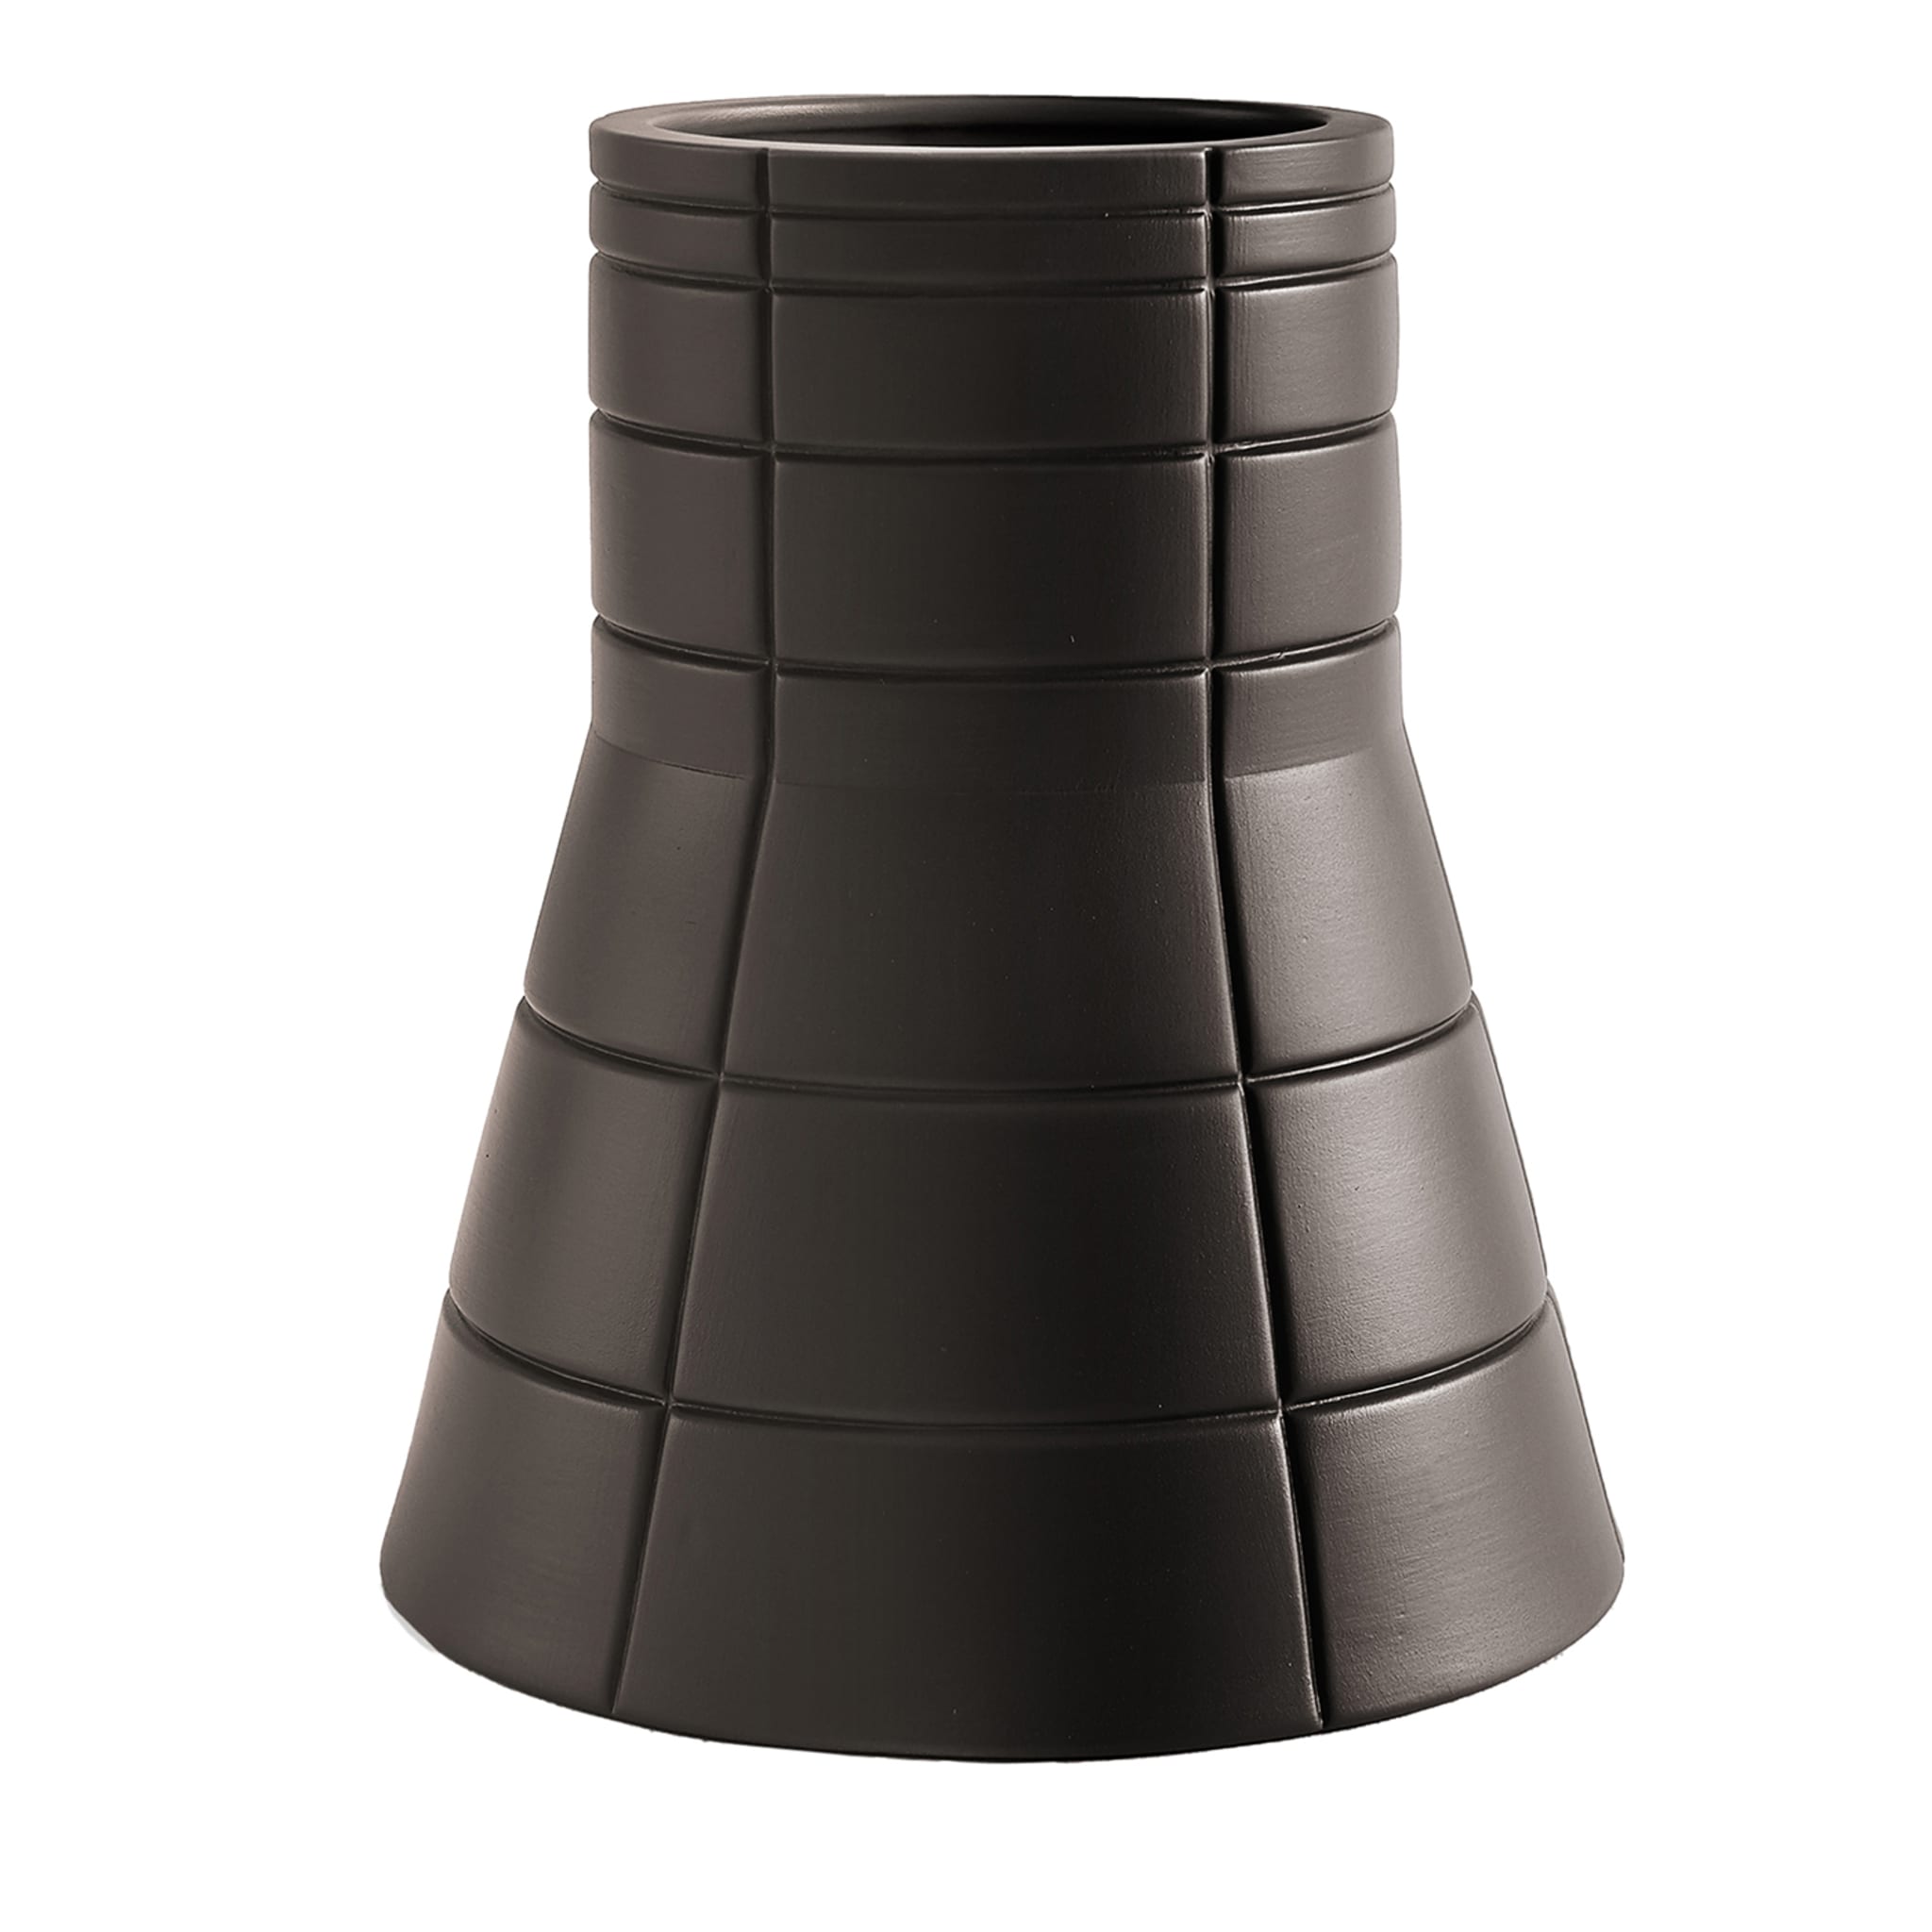 Rikuadra Black Ceramic Vase #3 - Main view